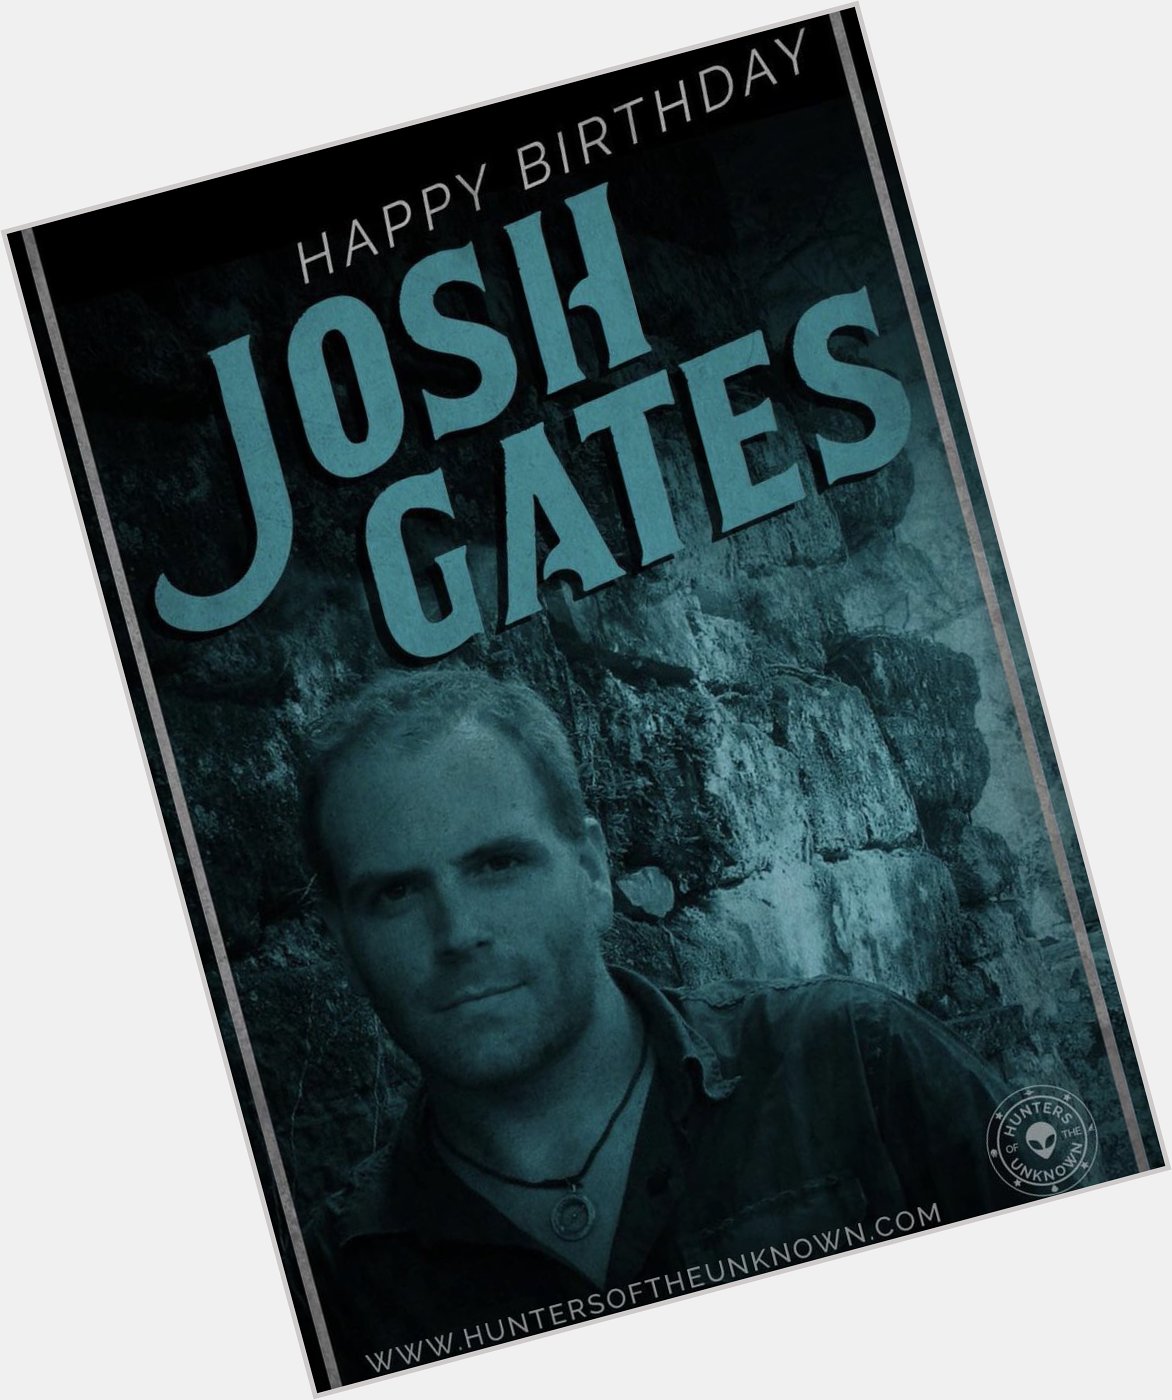 Happy Birthday to our favorite Paranormal Celebrity Josh Gates! 